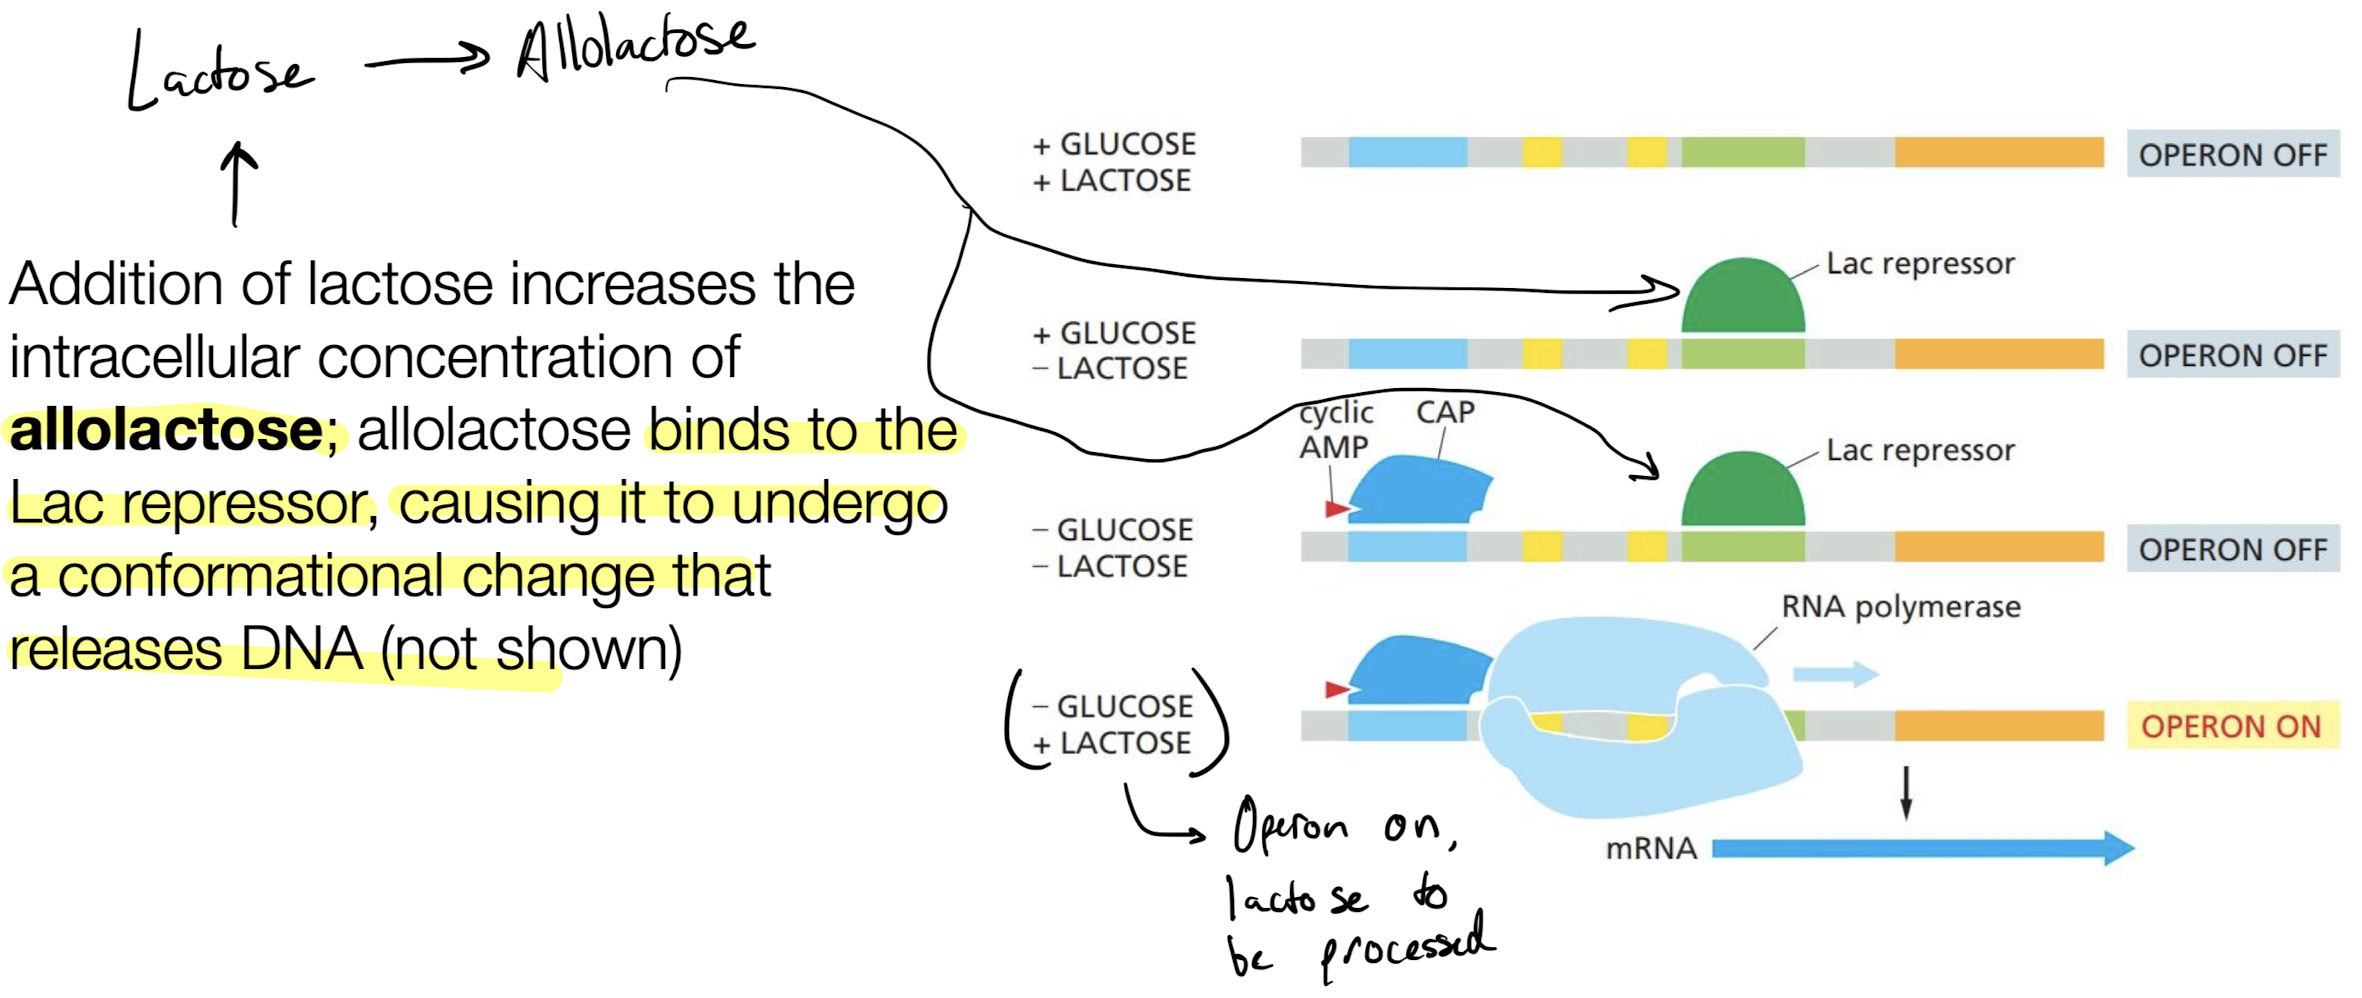 <p>Lac operon</p><ul><li><p>high glucose, high lactose → operon off</p></li><li><p>high glucose, low lactose → lac repressor binds to operon, stops processing of lactose</p></li><li><p>low glucose, low lactose → both activator and repressor binds to operon, no lactose is processed</p></li><li><p>low glucose, high lactose → operon is <strong>ON</strong>, lactose is processed</p></li></ul>